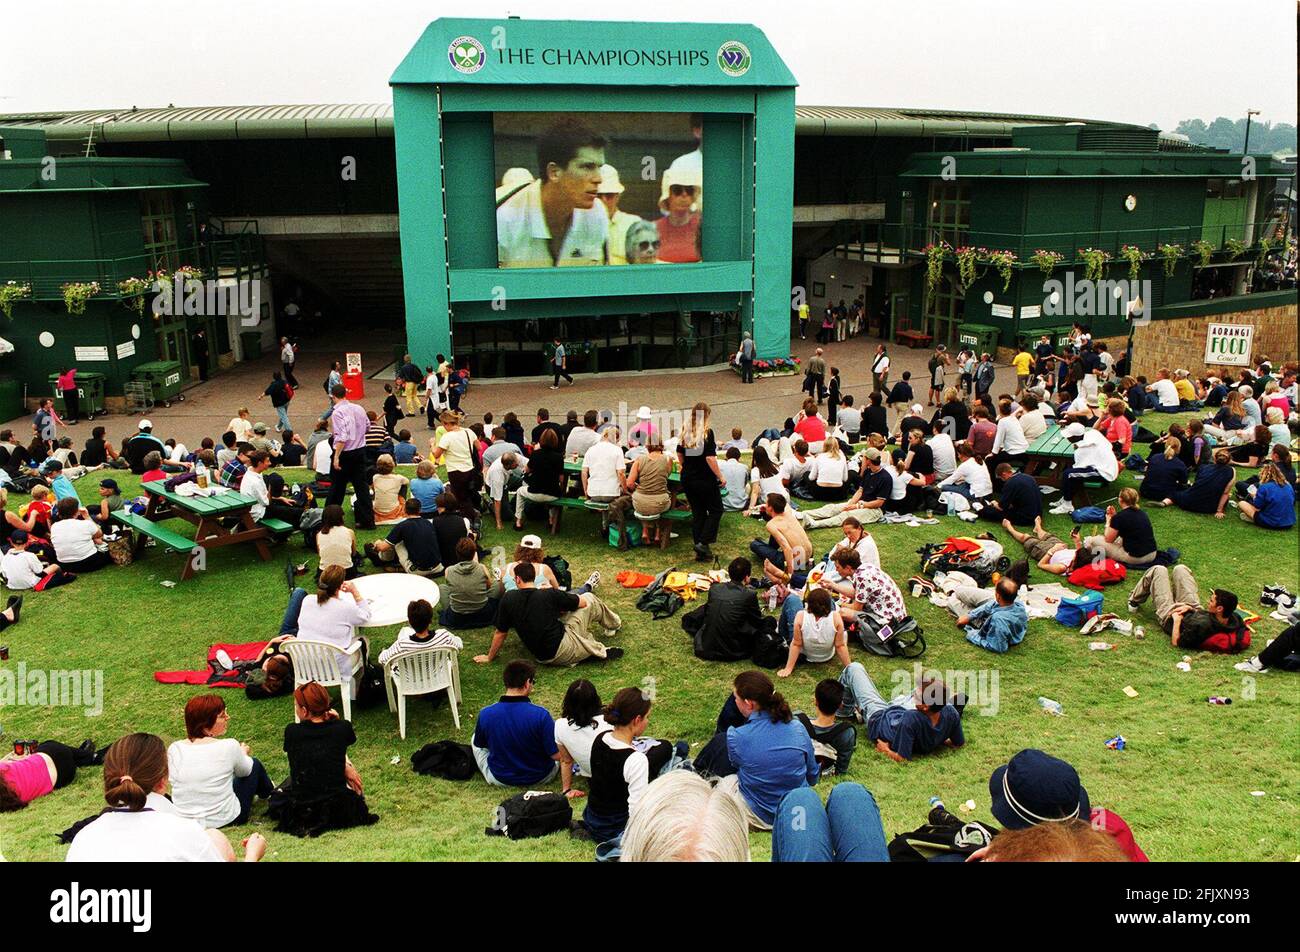 Wimbledon Crowd June 2000 watching tennis match on big screen Tim Henman playing Stock Photo